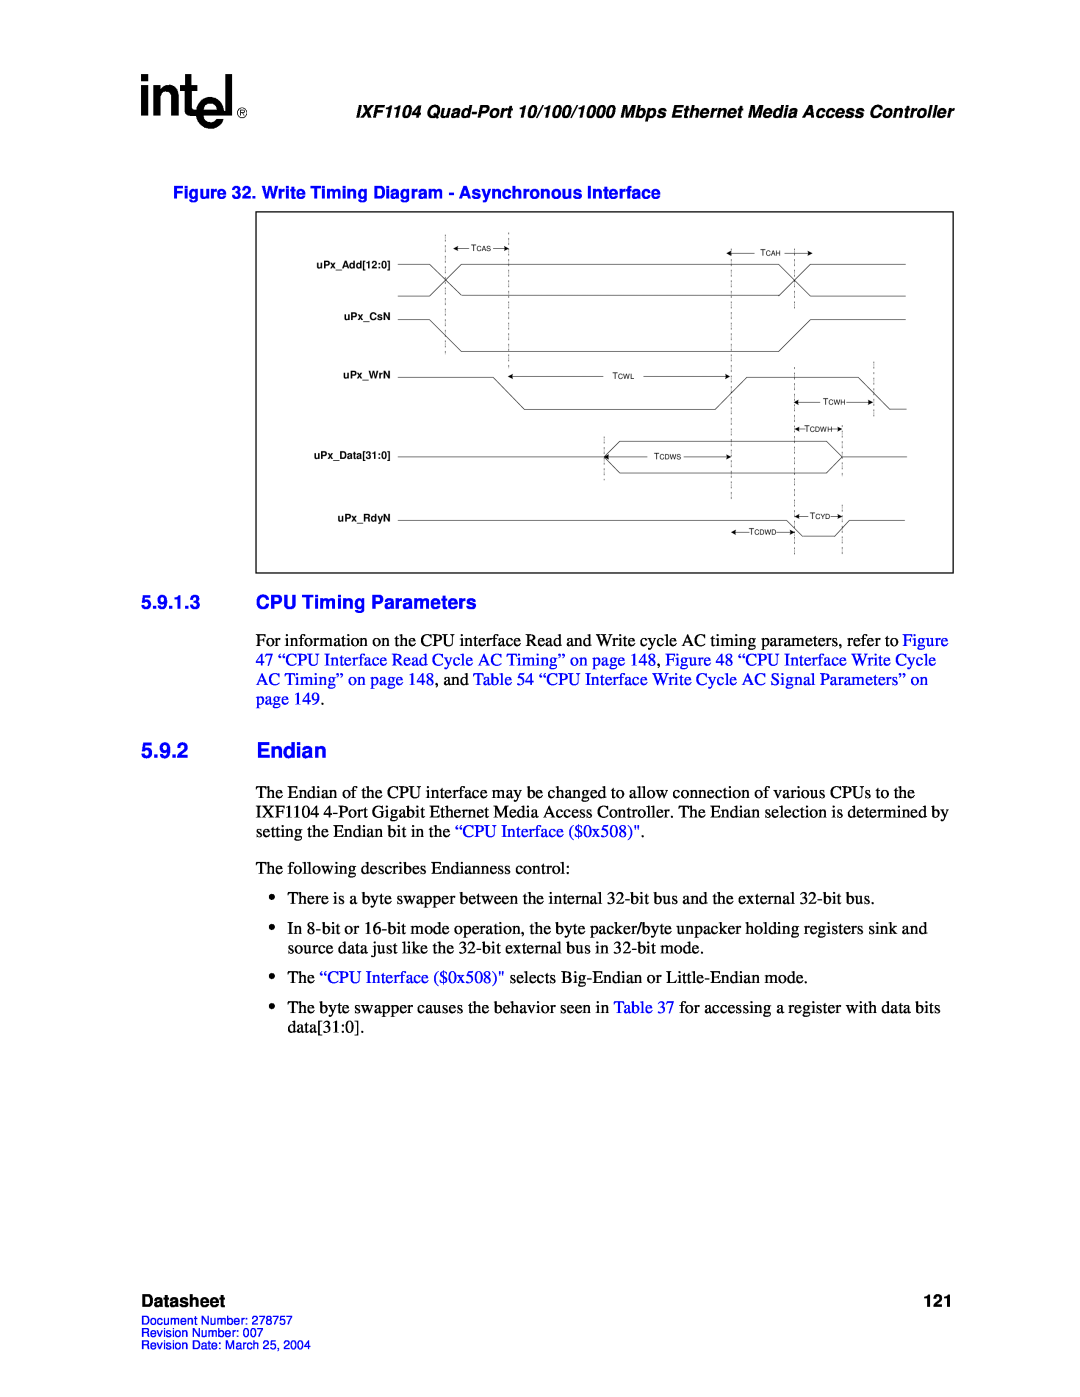 Intel IXF1104 manual 5.9.2Endian, 5.9.1.3CPU Timing Parameters, Datasheet 